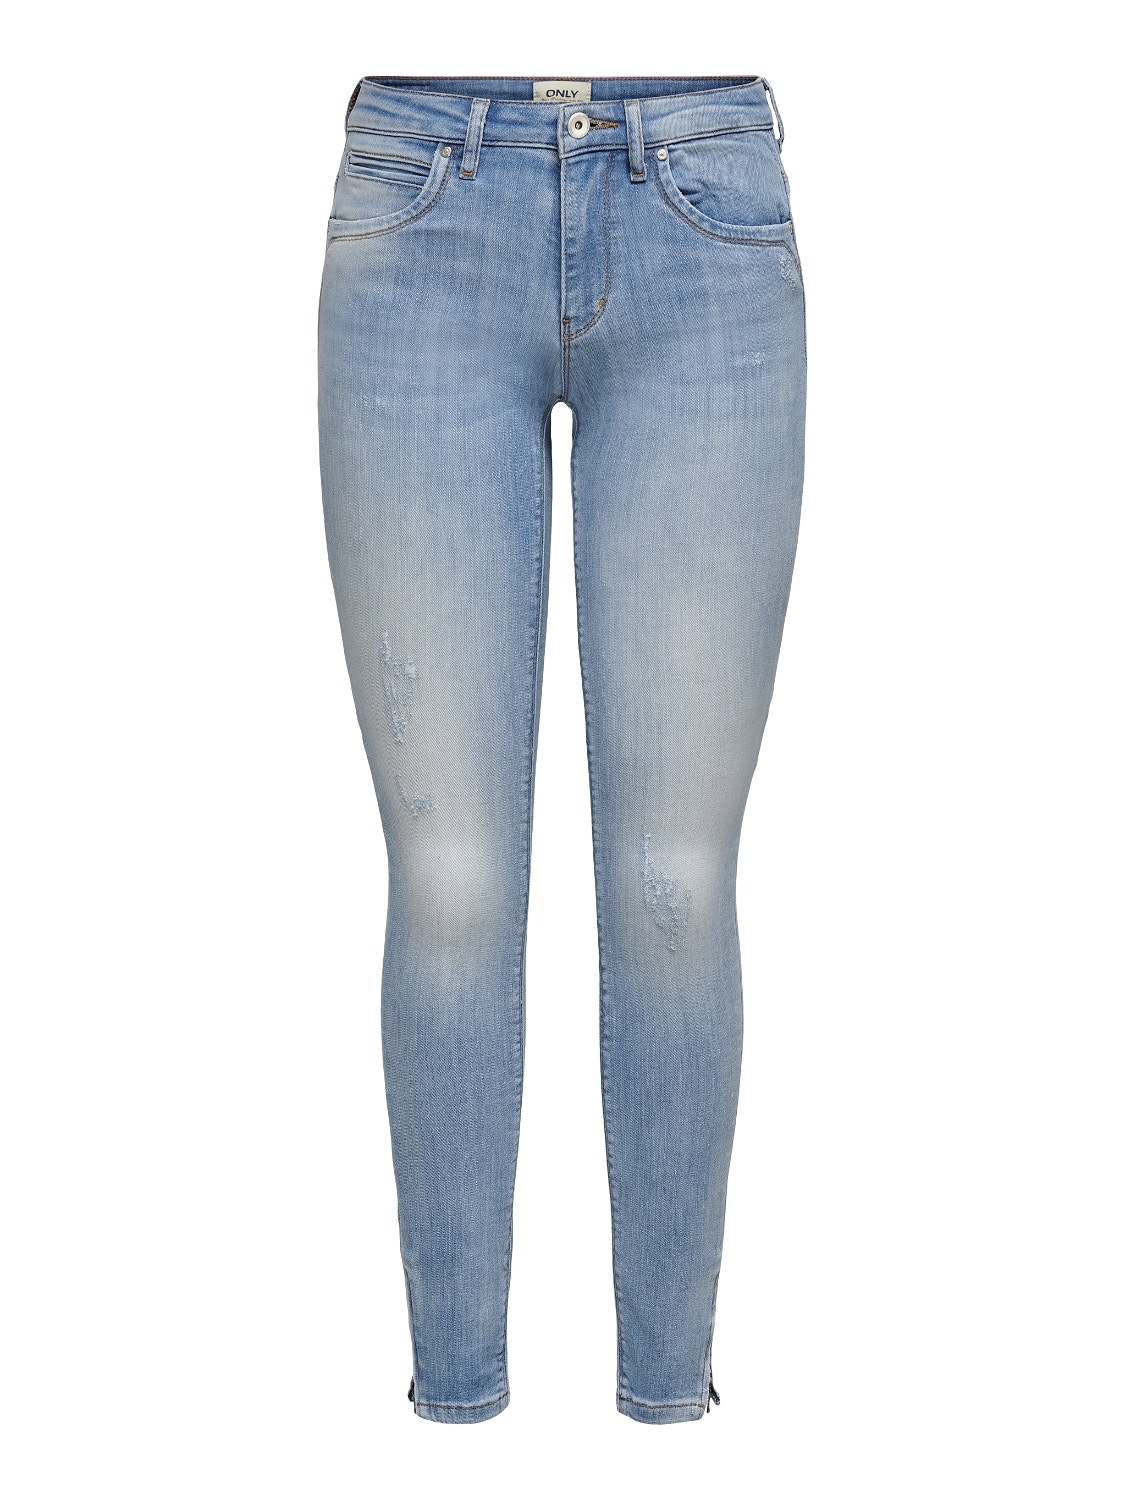 ONLY Kendell Reg Ankle Zip Jeans in Skinny Fit Skinny Fit Jeans -Light Blue Denim - 15170824